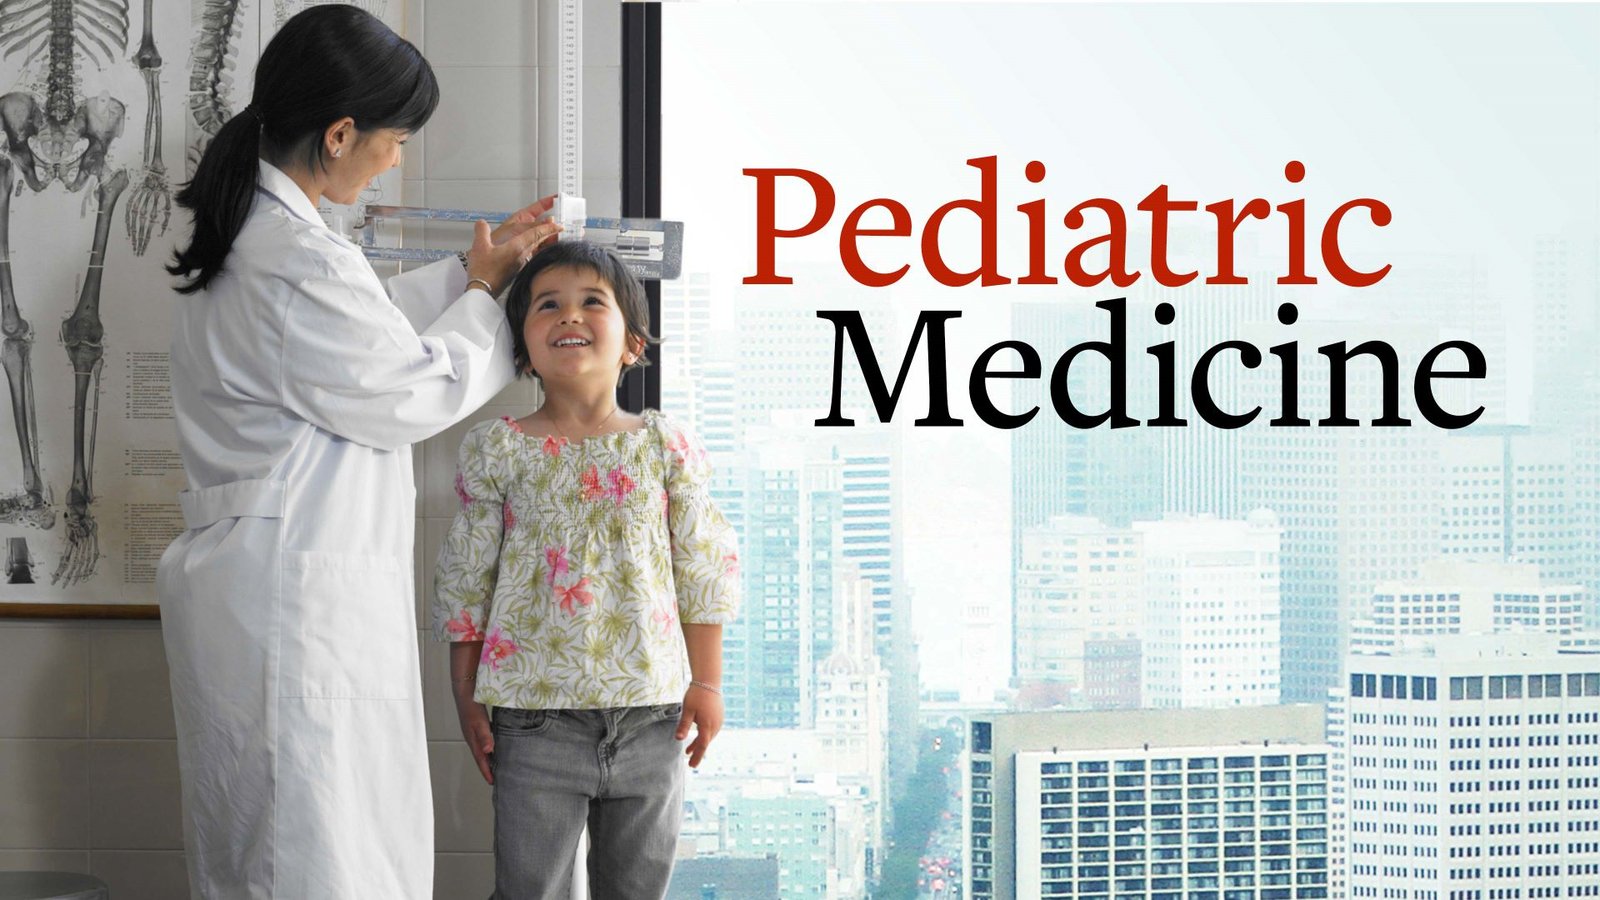 Medical School for Everyone - Pediatrics Grand Rounds